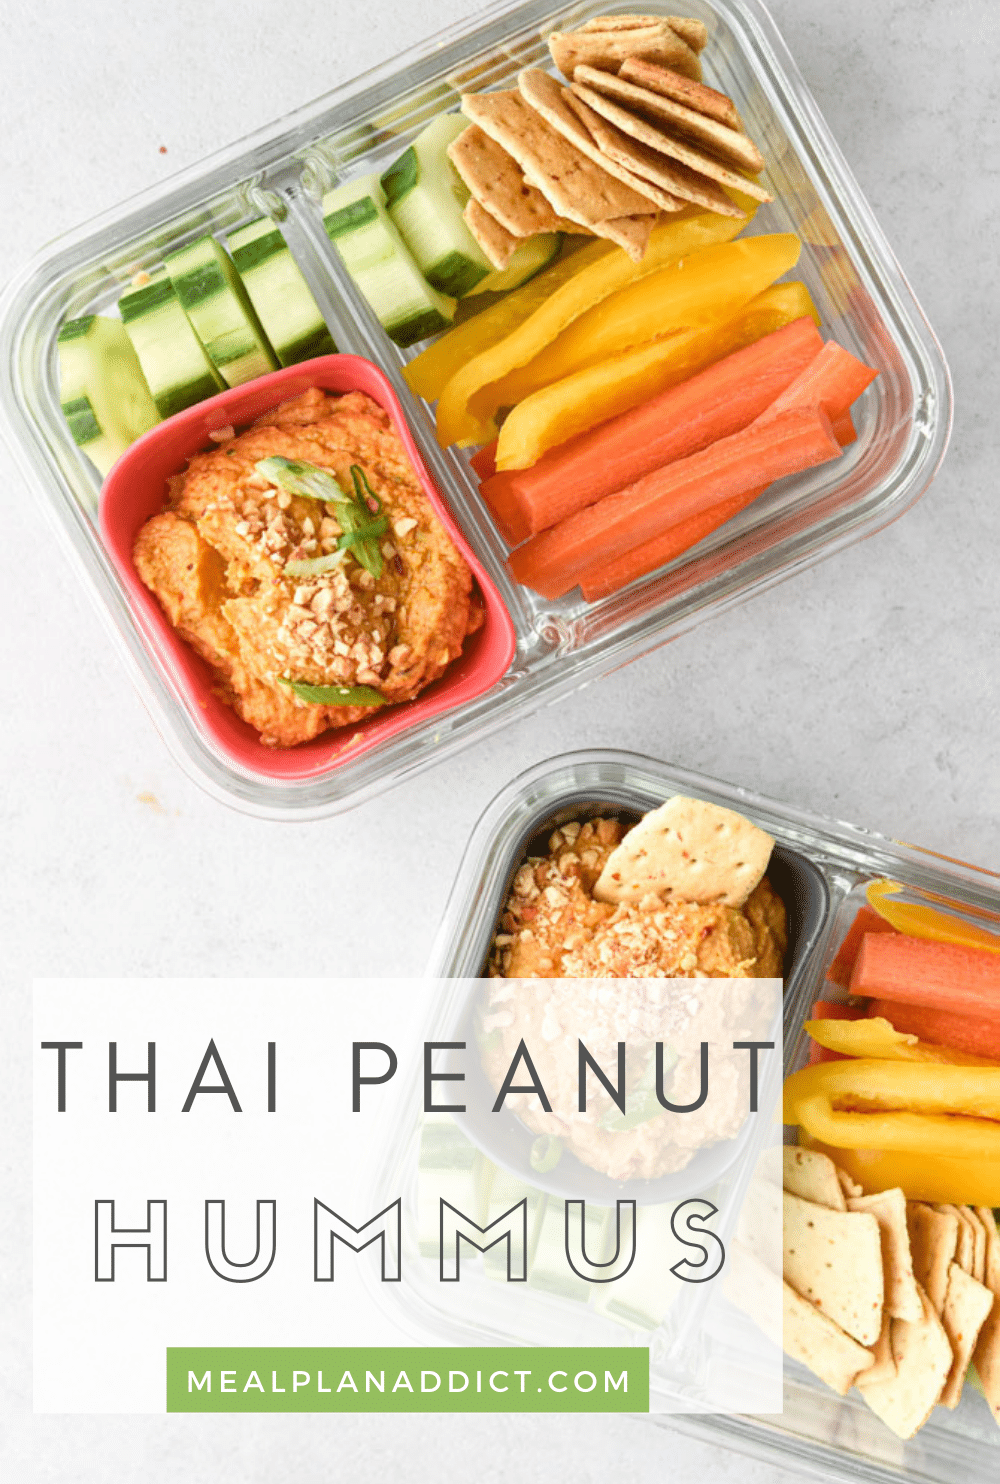 Hummus pin for Pinterest